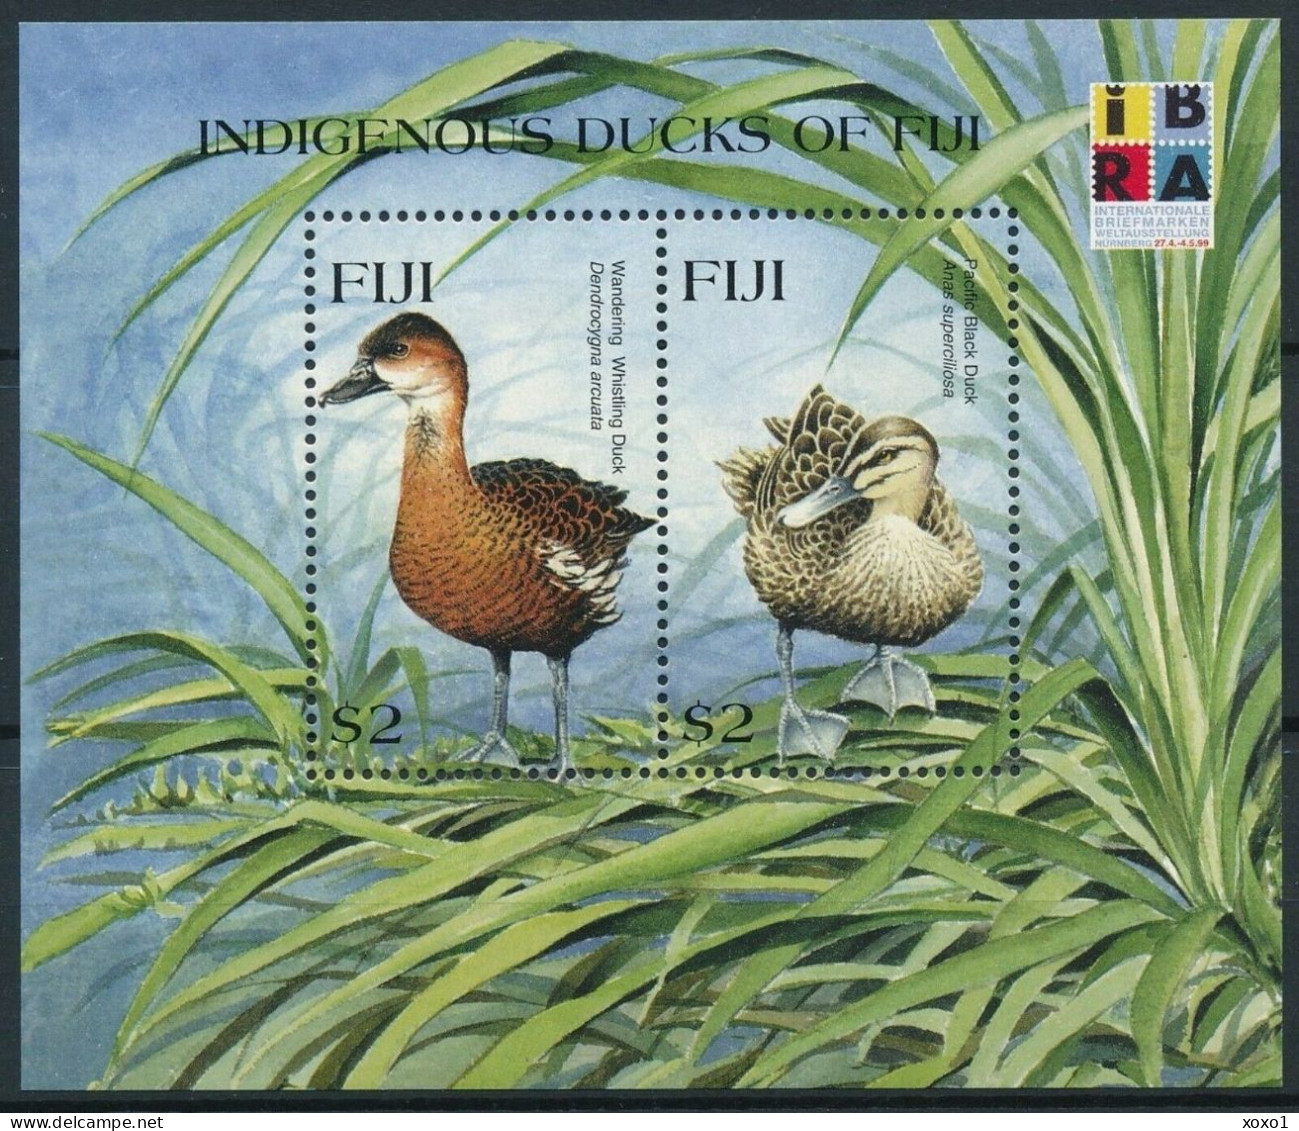 Fiji 1999 MiNr. 878 - 879 (Block 30) Fidschi-Inseln Birds Ducks Vogel IBRA ’99, Nuremberg S\sh MNH** 6,00 € - Expositions Philatéliques